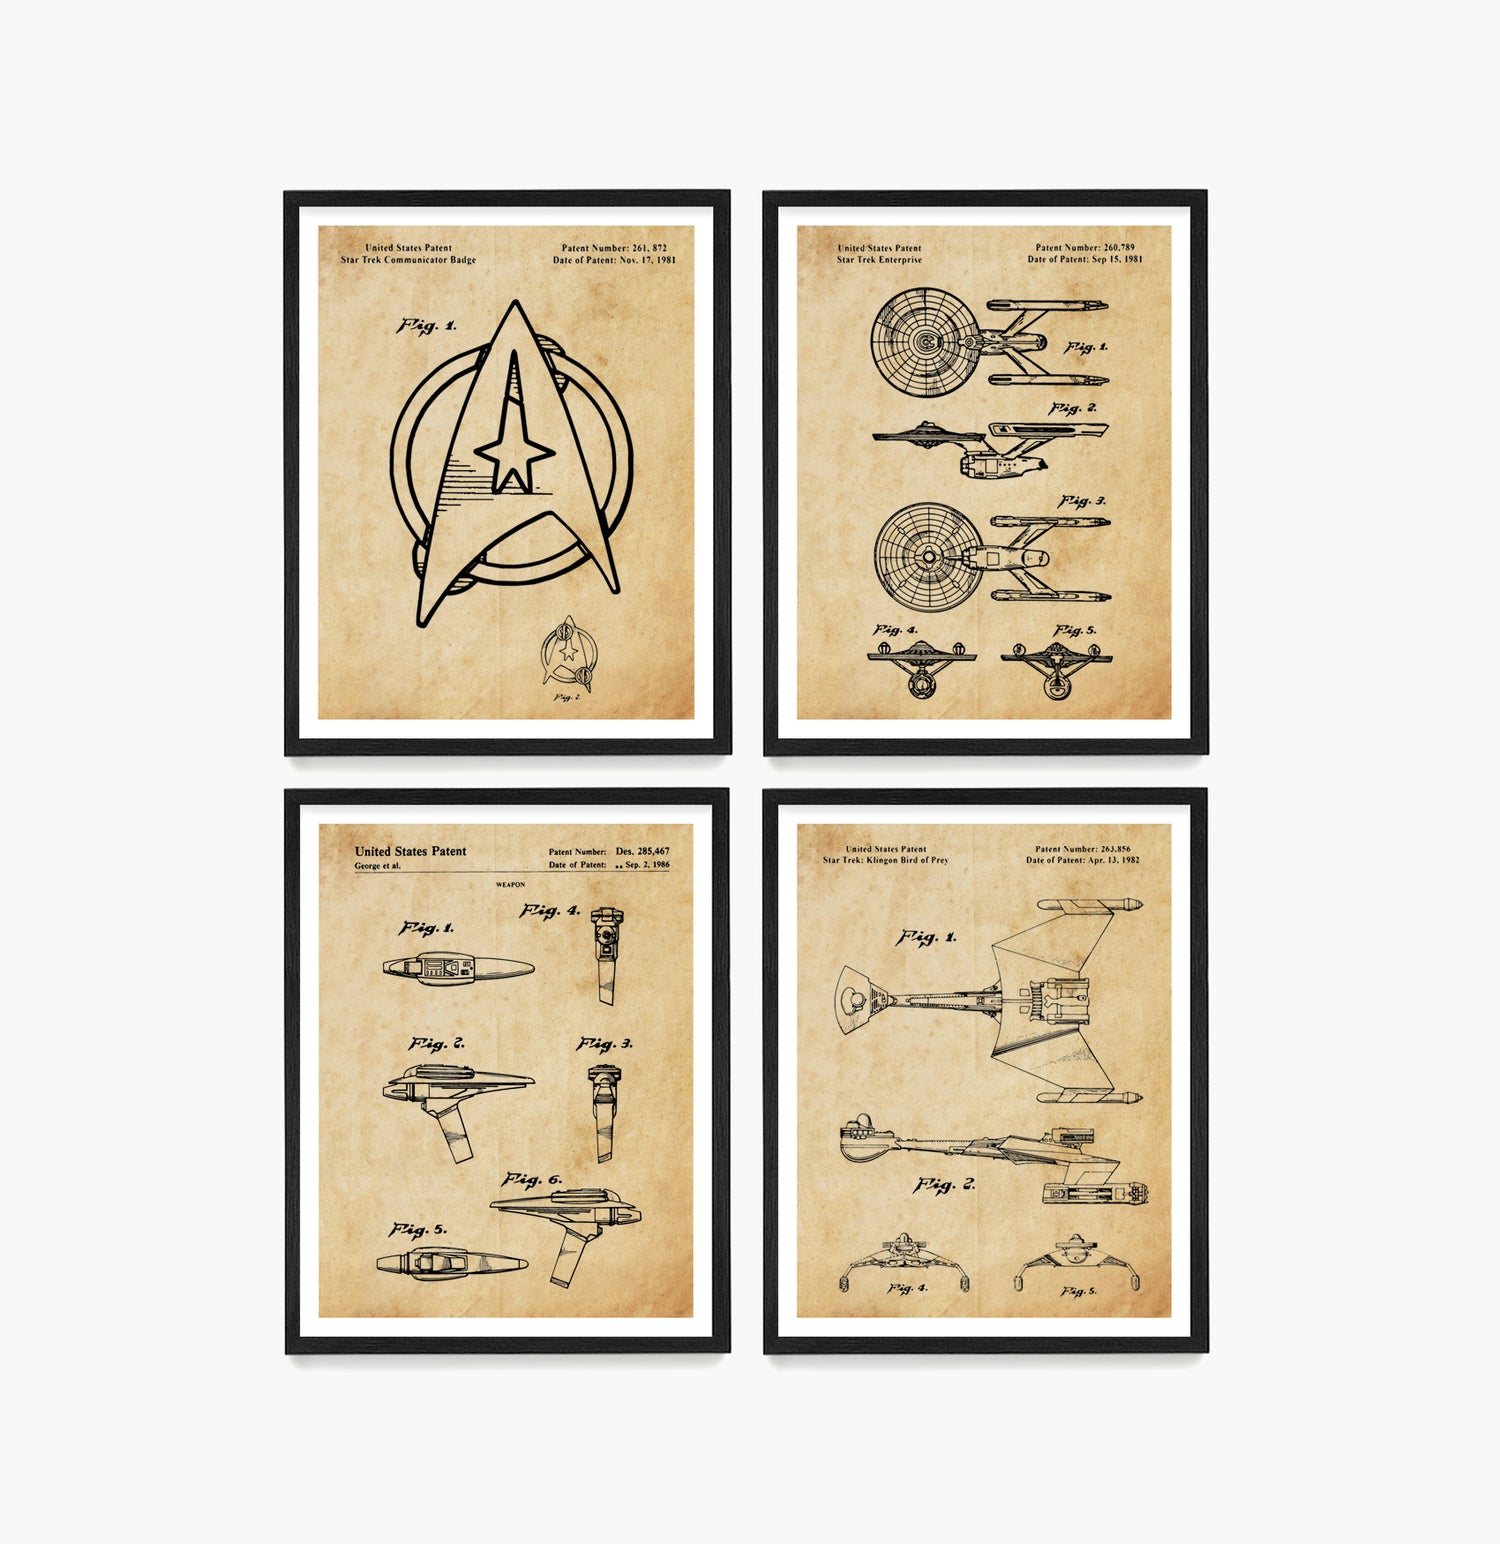 Star Trek Badge Patent Poster, Star Trek Wall Art